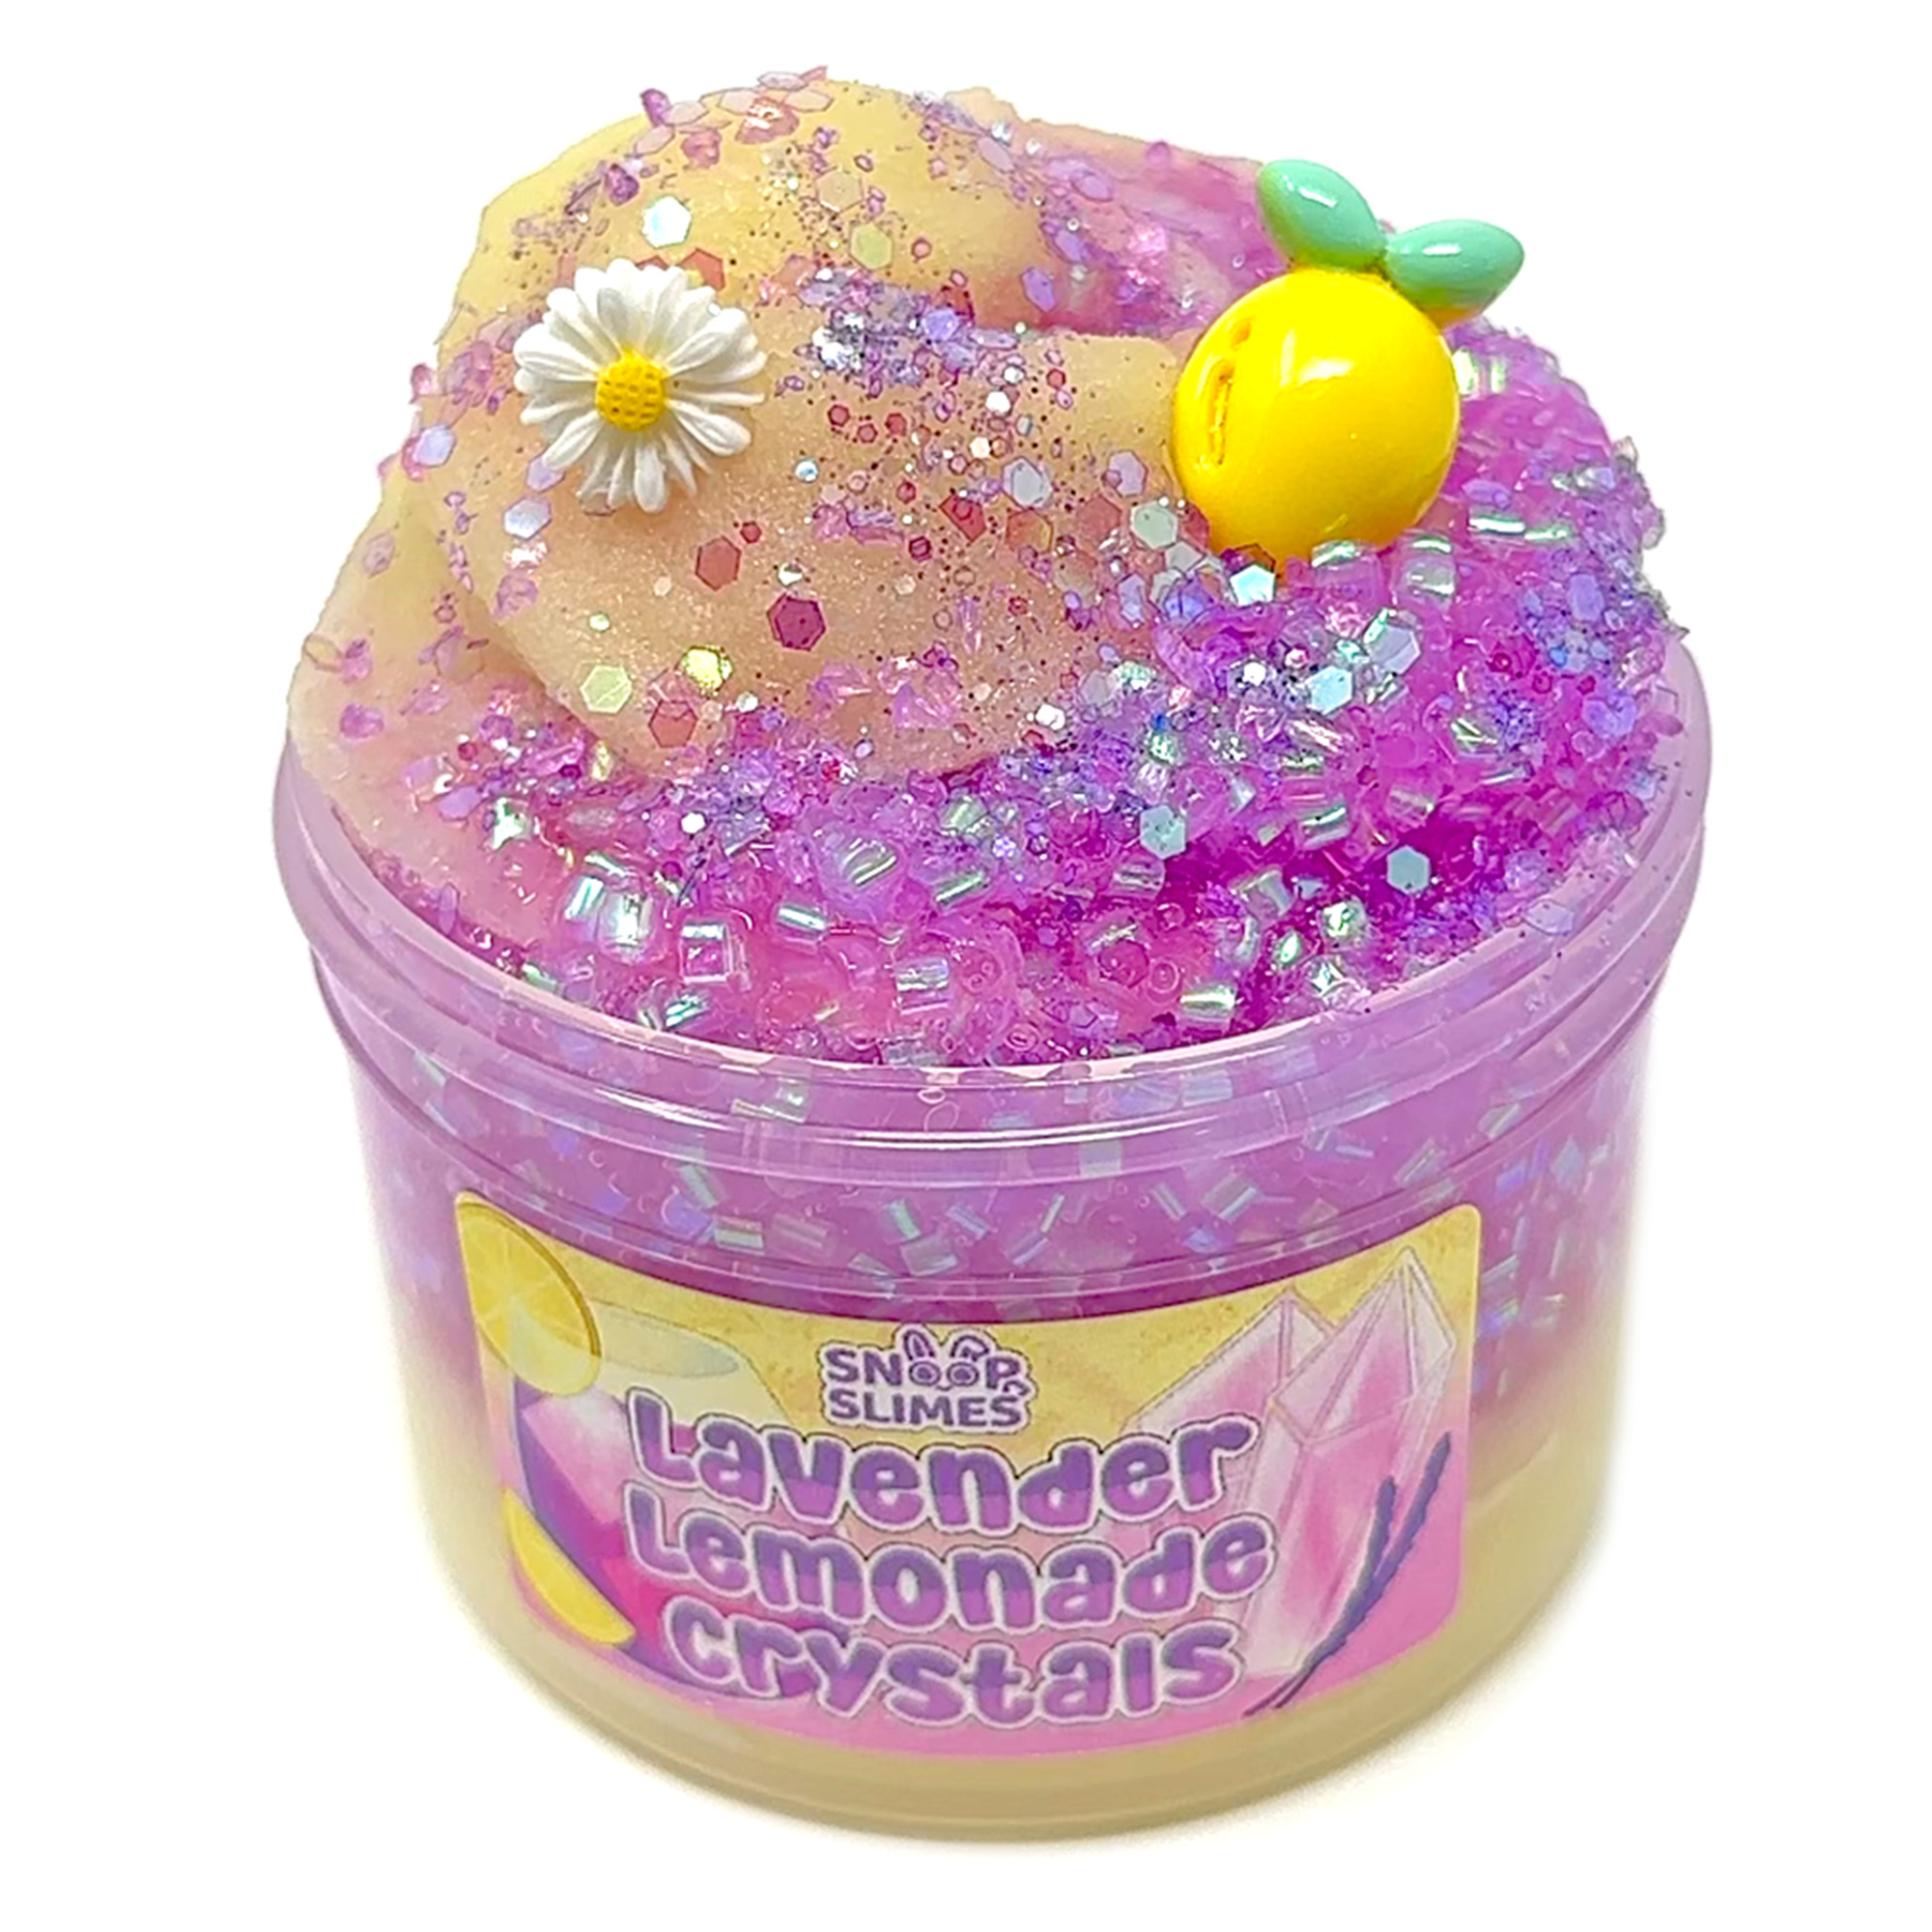 Lavender Lemonade Crystals Slime